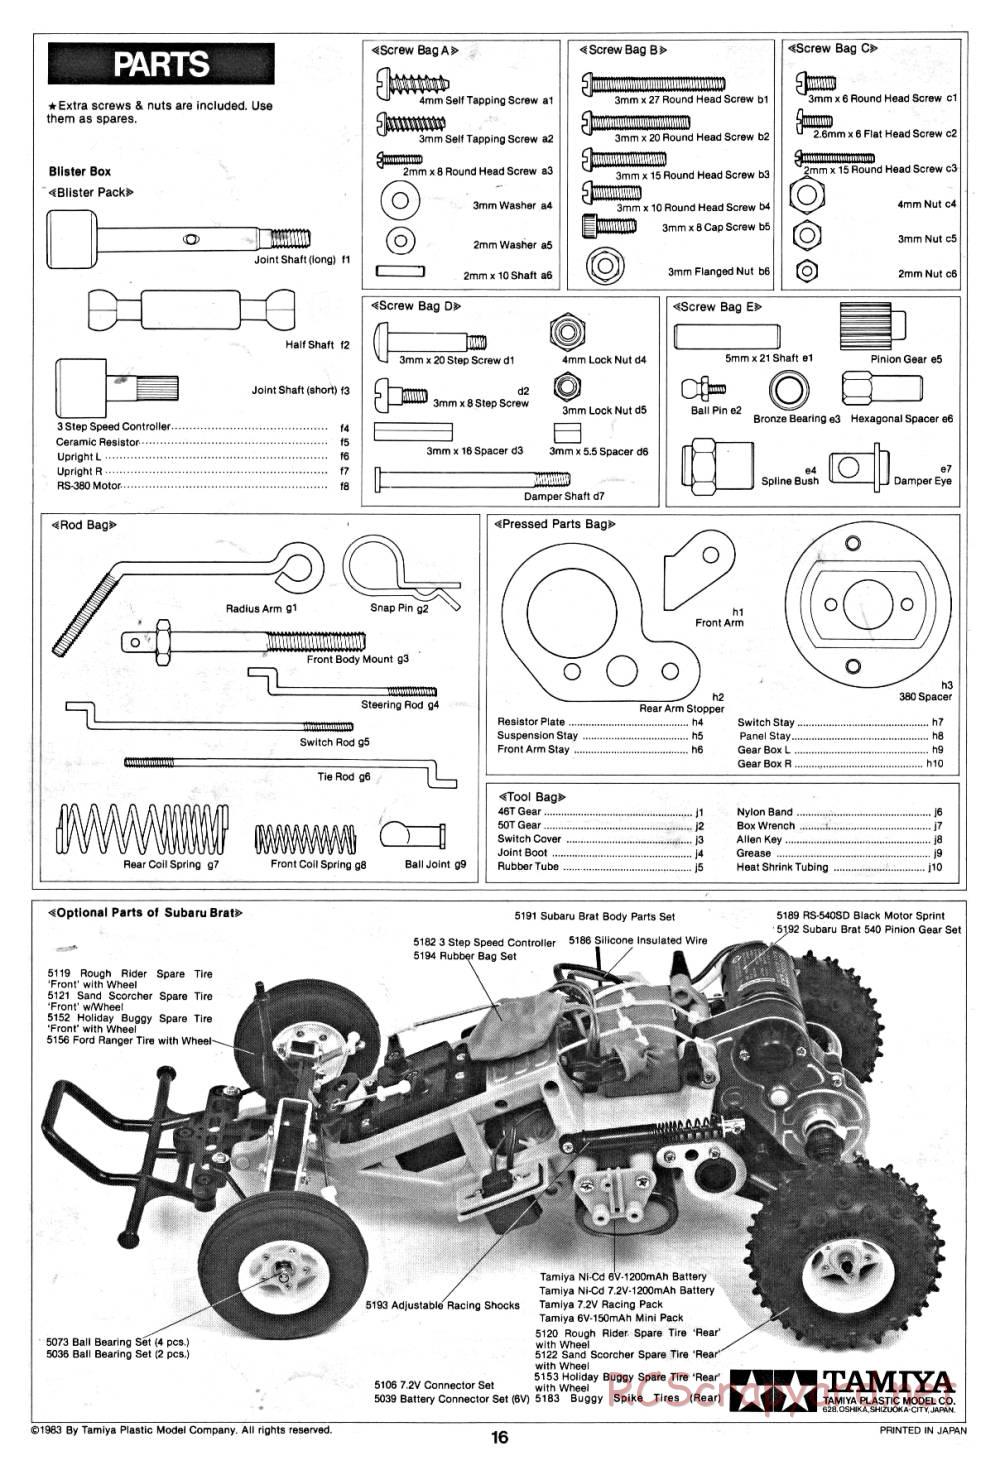 Tamiya - Subaru Brat - 58038 - Manual - Page 16